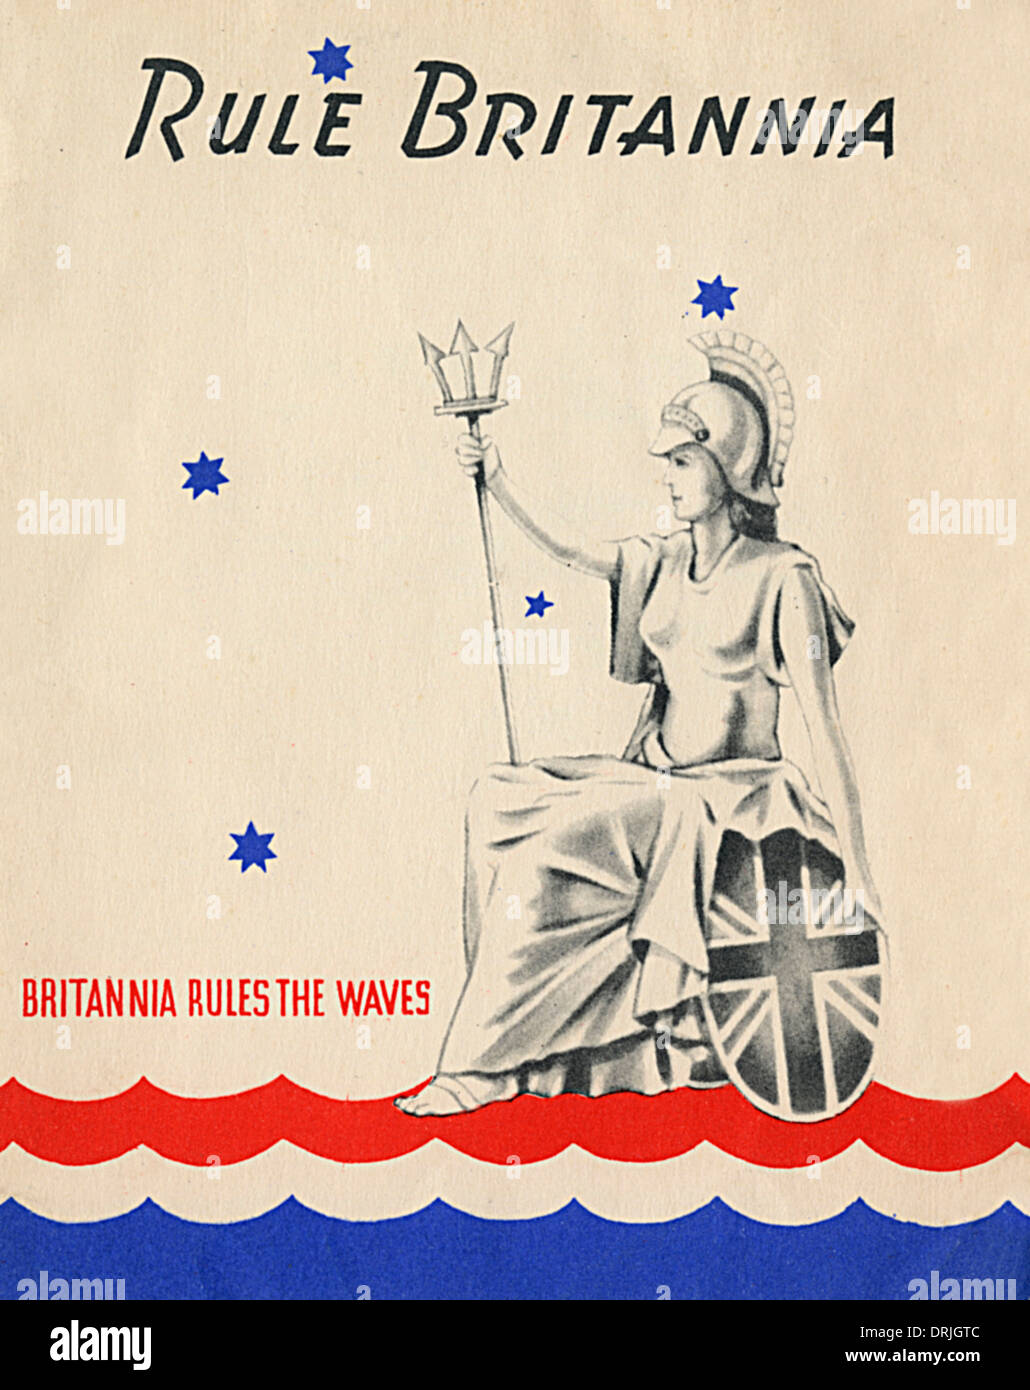 Rule Britannia - Règles de Britannia les vagues Banque D'Images